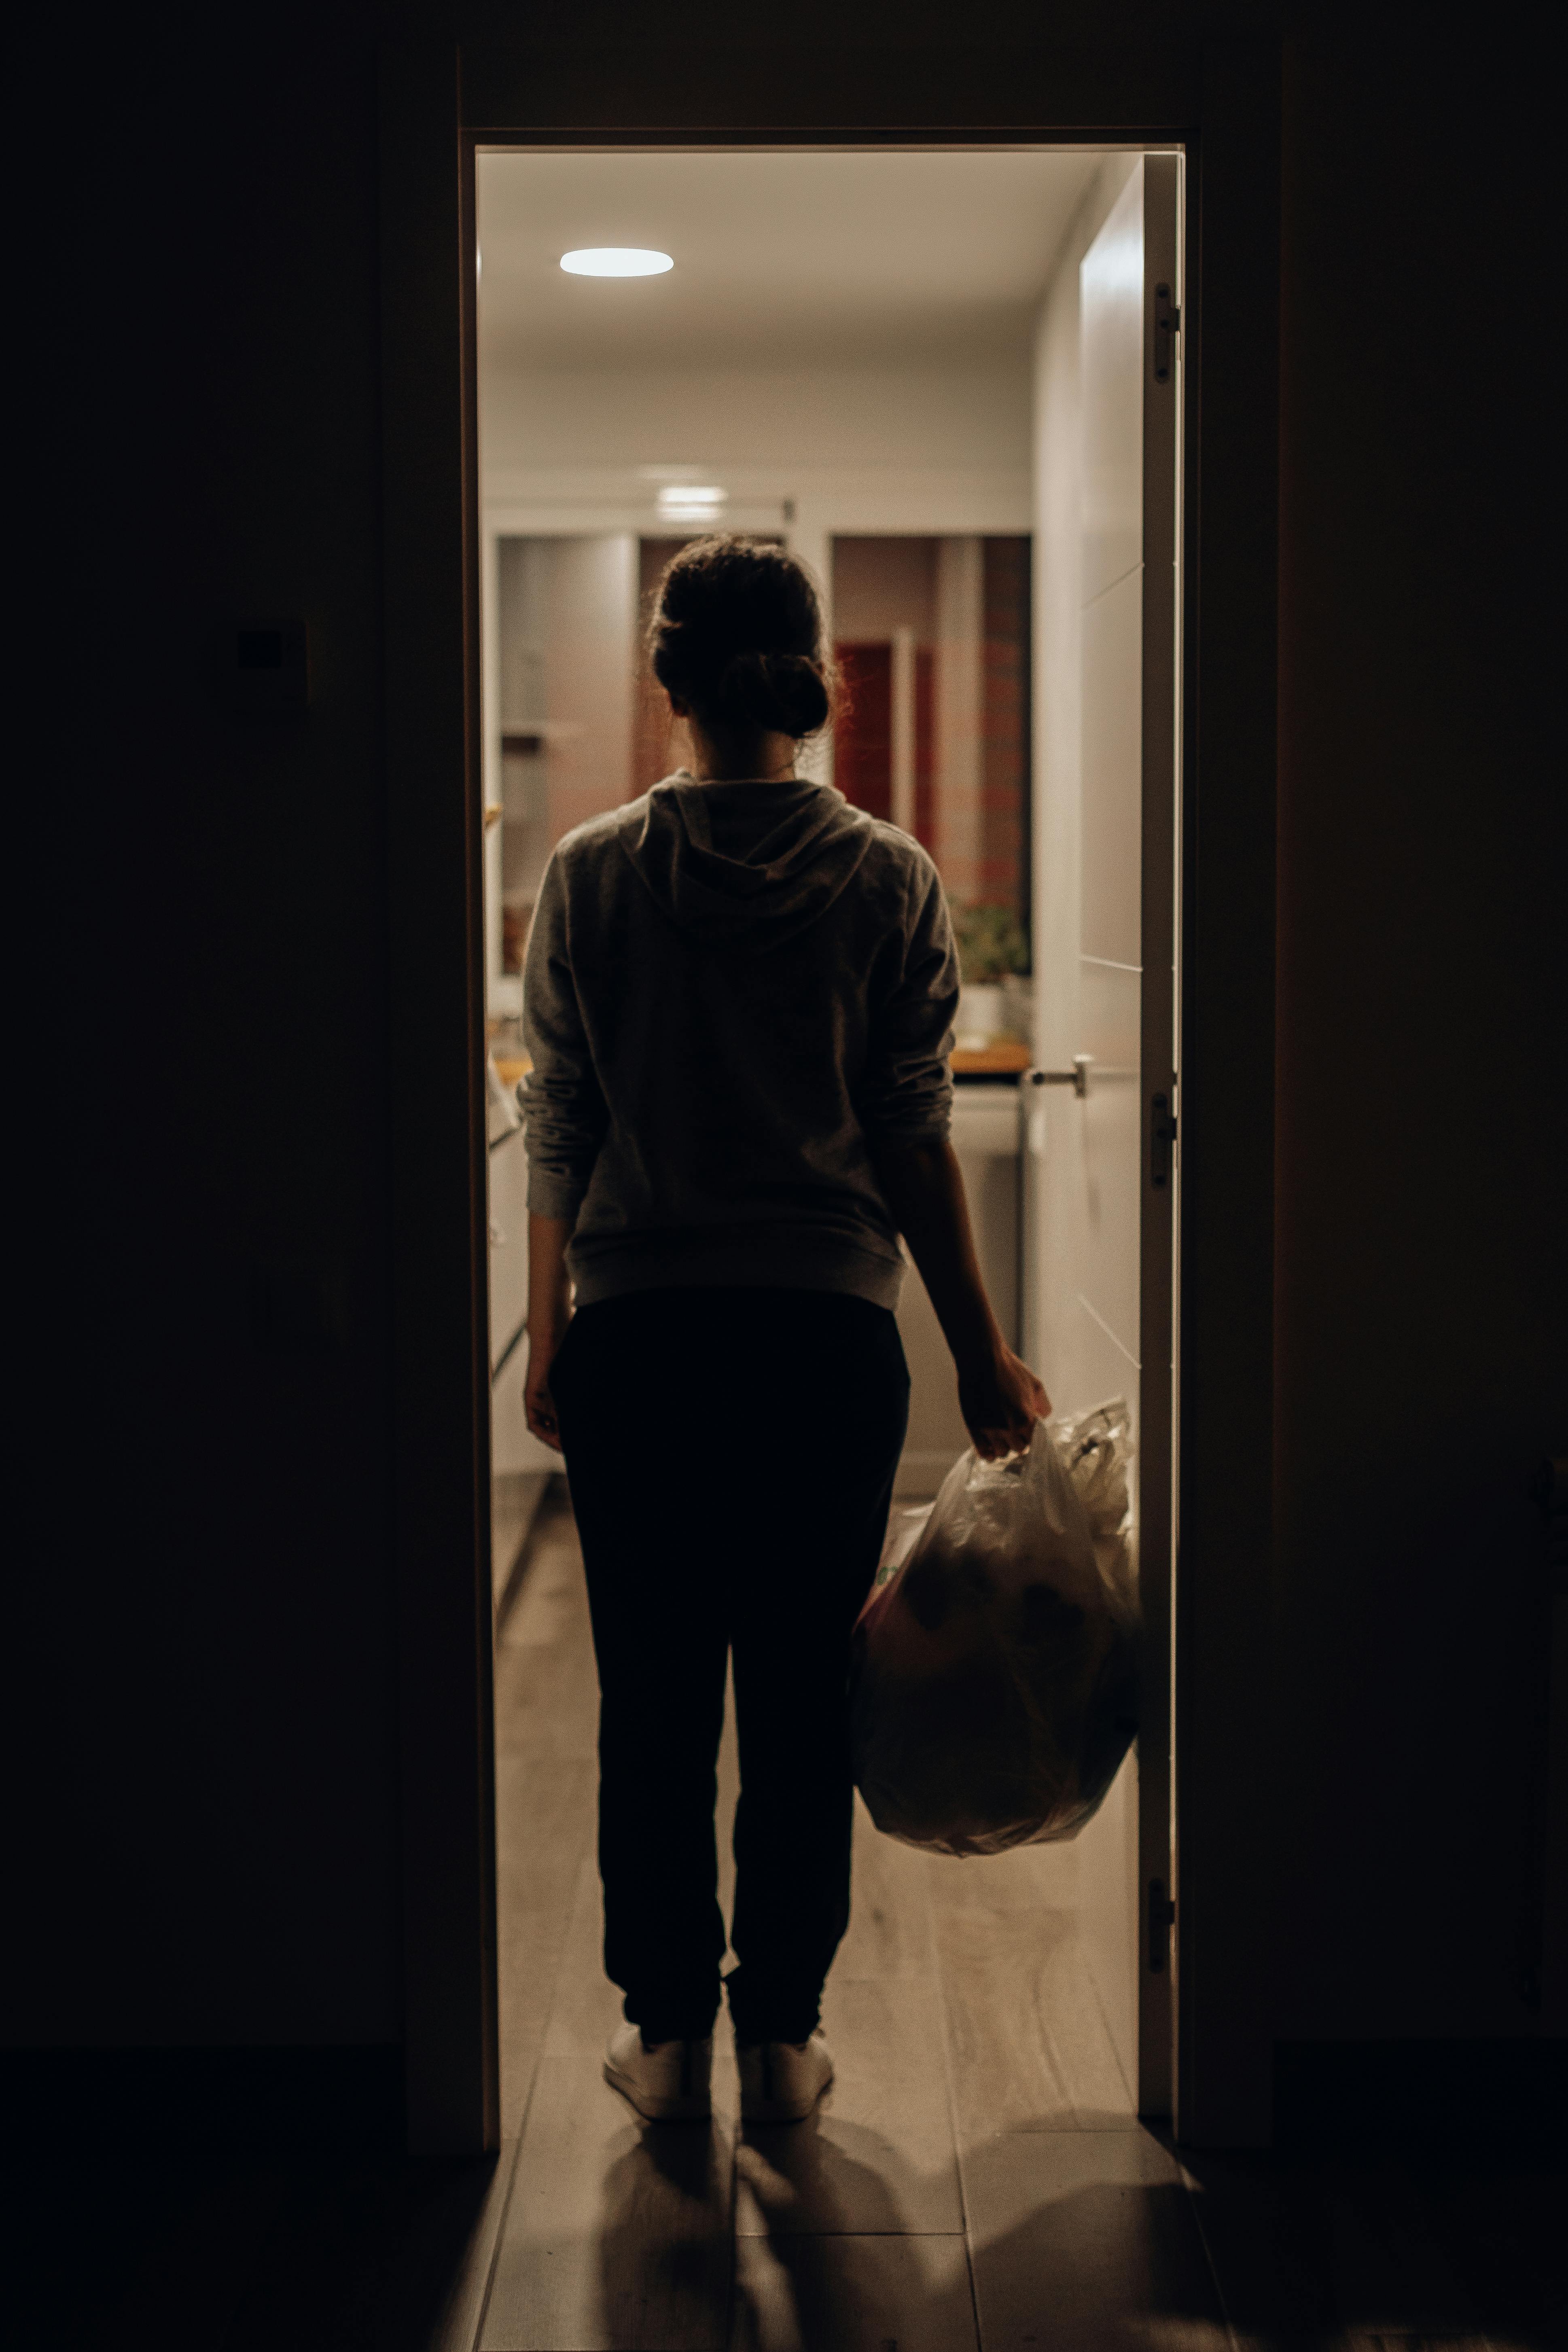 A woman holding a full trash bag | Source: Pexels